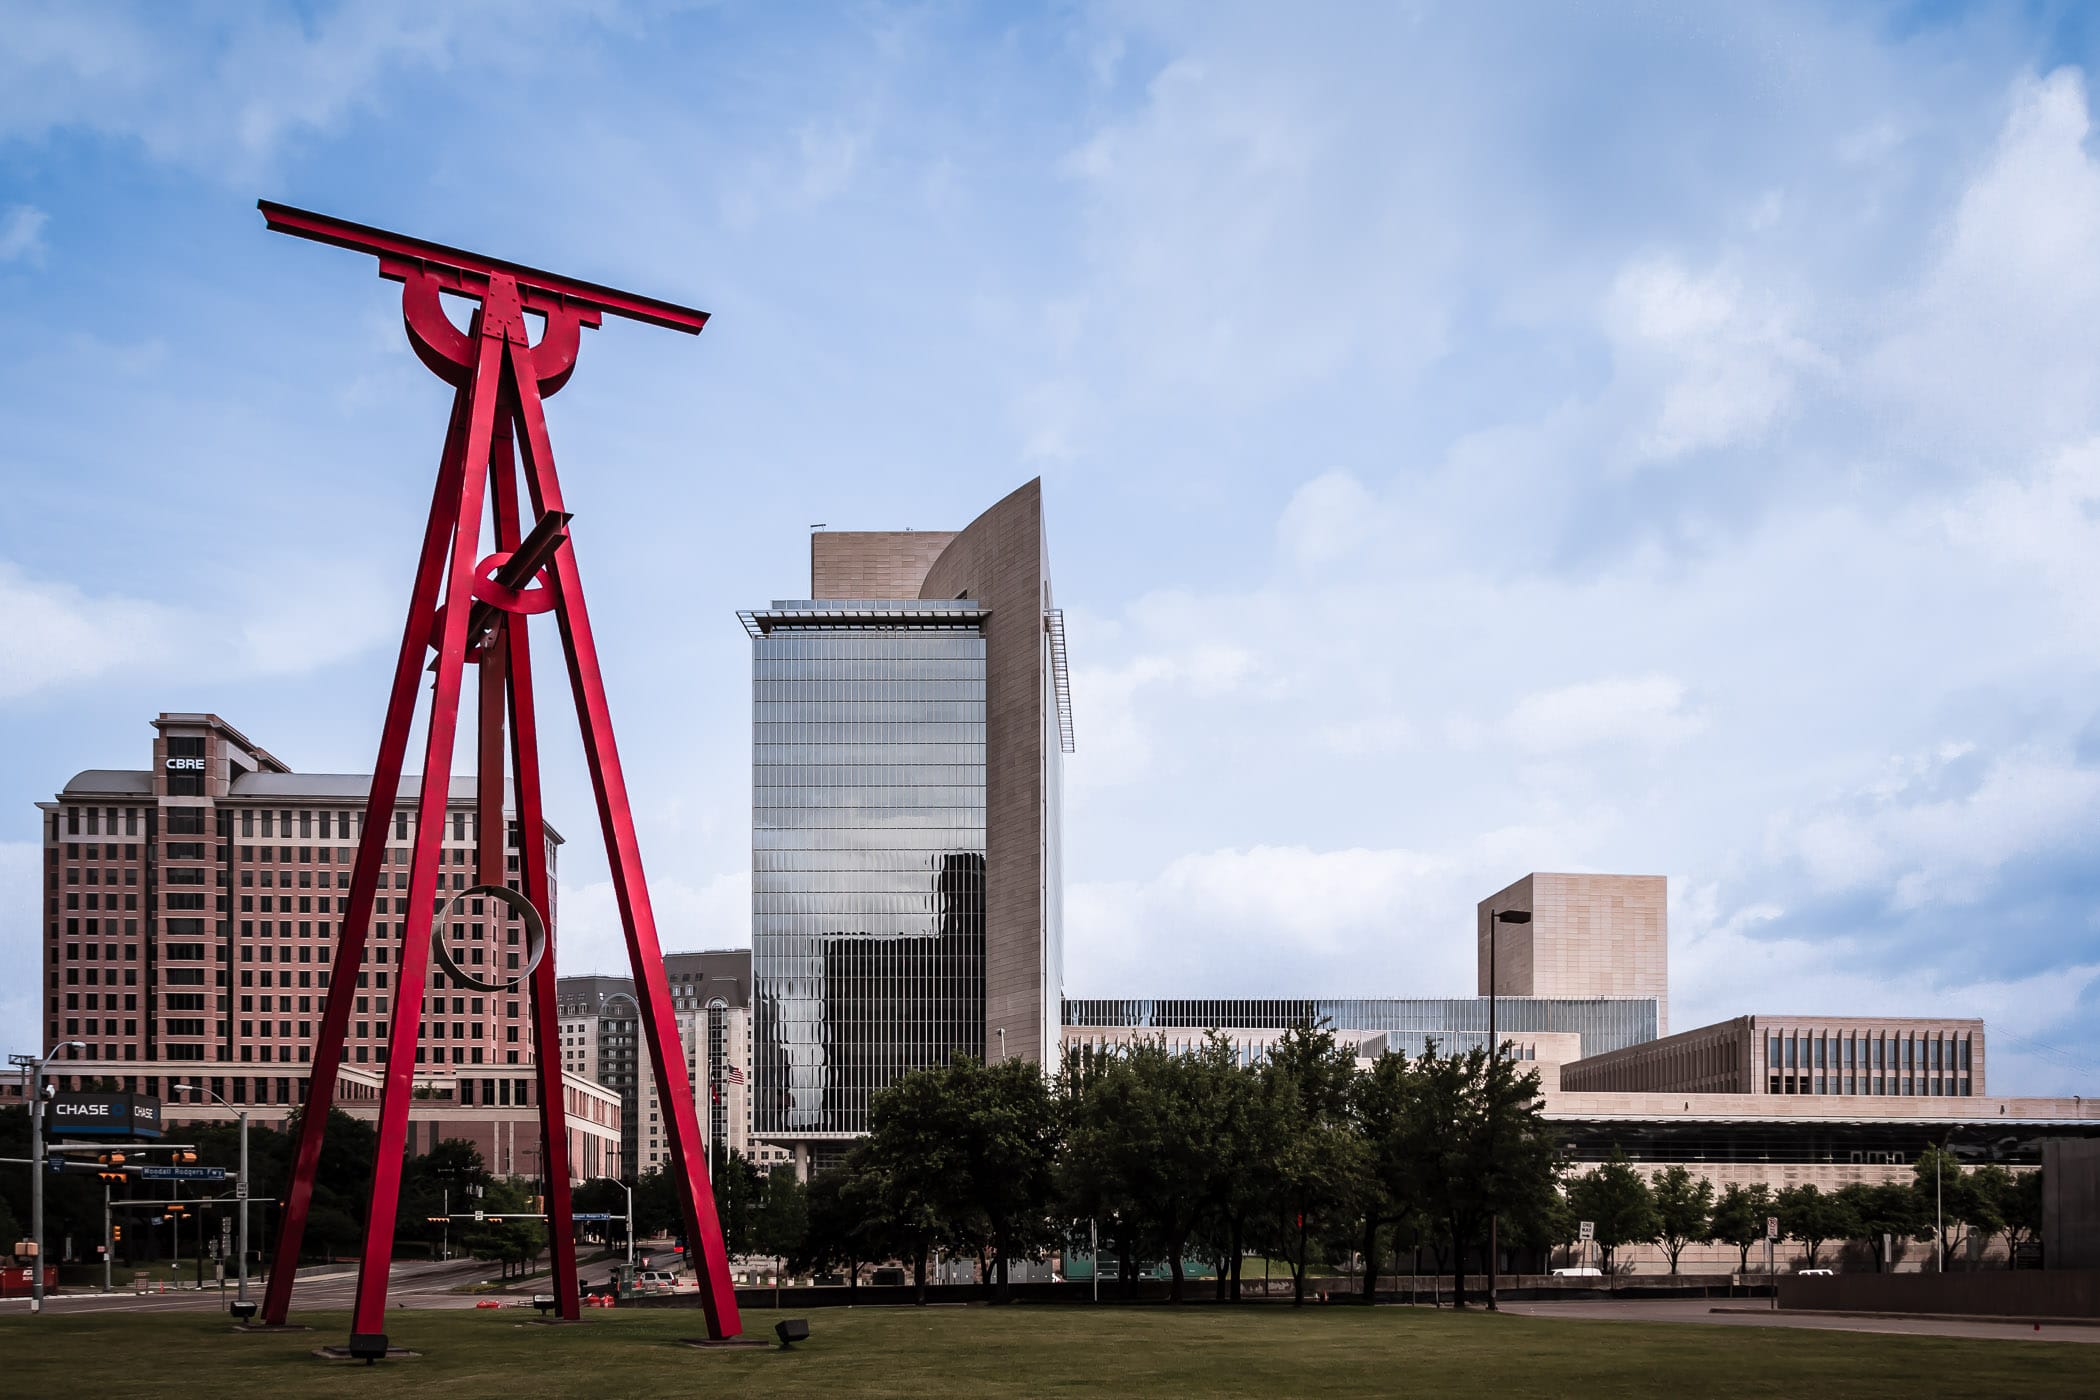 Mark Di Suvero's "Proverb" rises over the Dallas Arts District on the north lawn of the Meyerson Symphony Center.